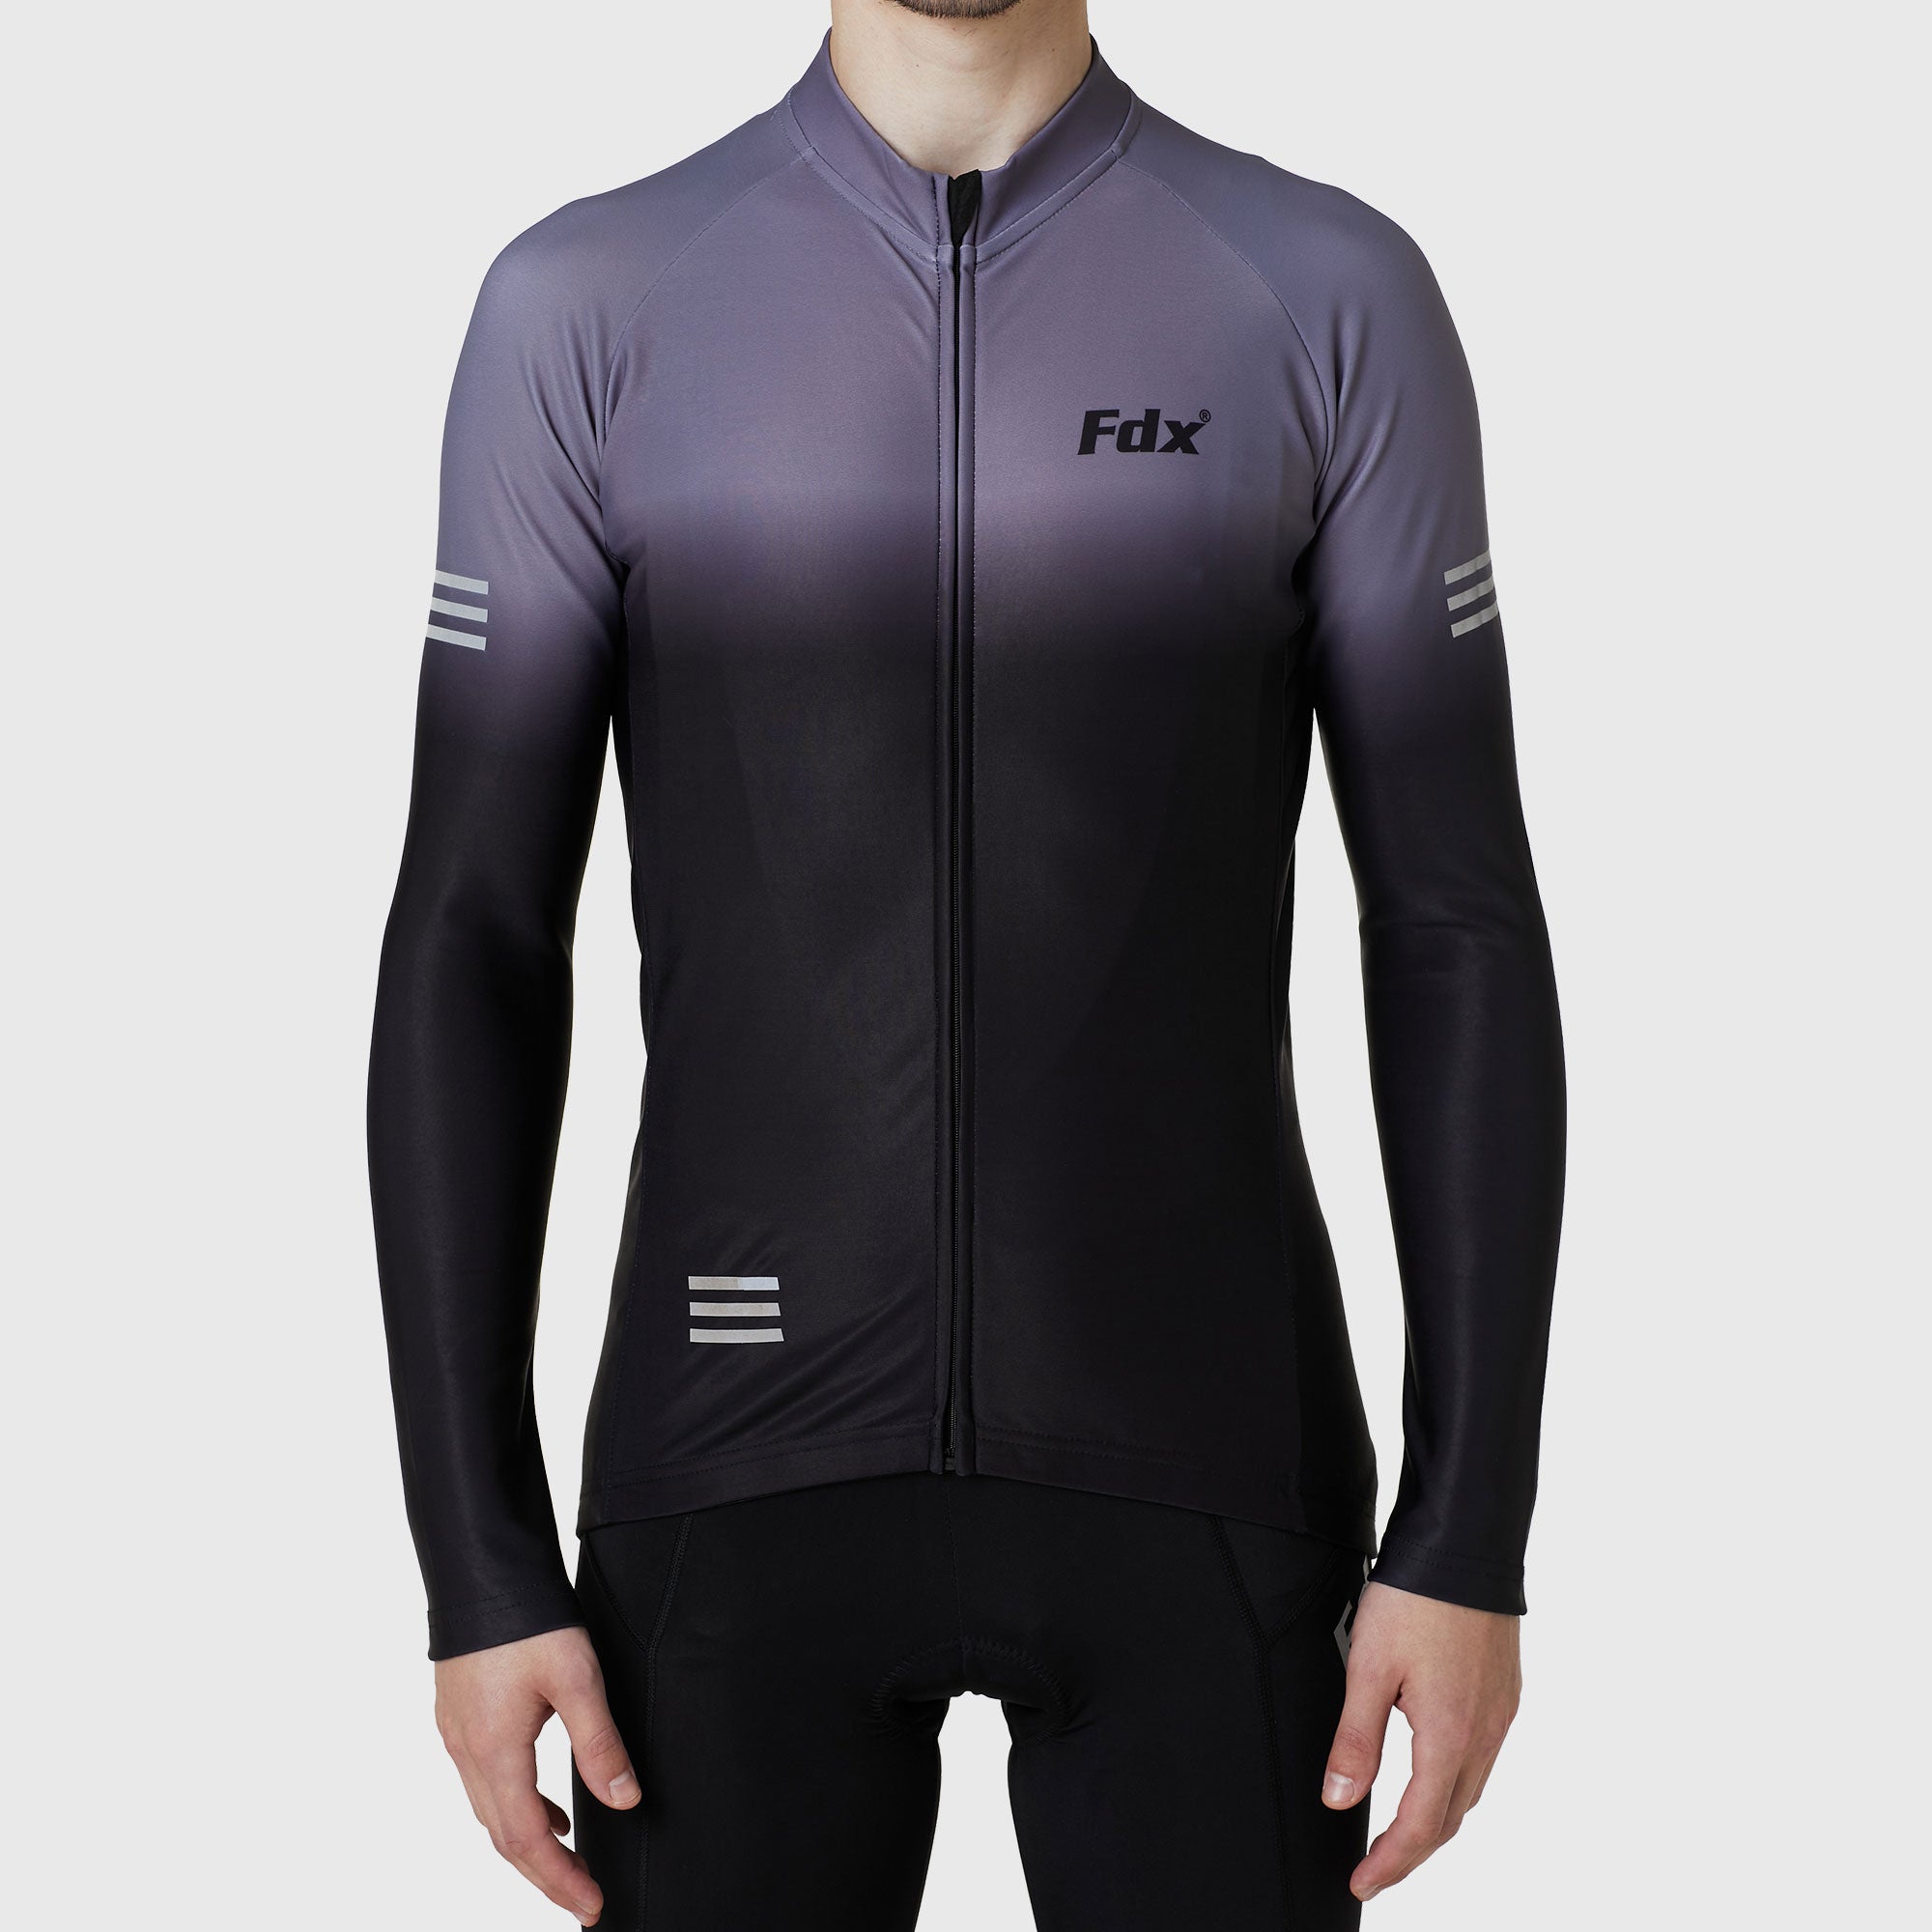 Fdx Duo Men's Grey / Black Thermal Roubaix Long Sleeve Cycling Jersey